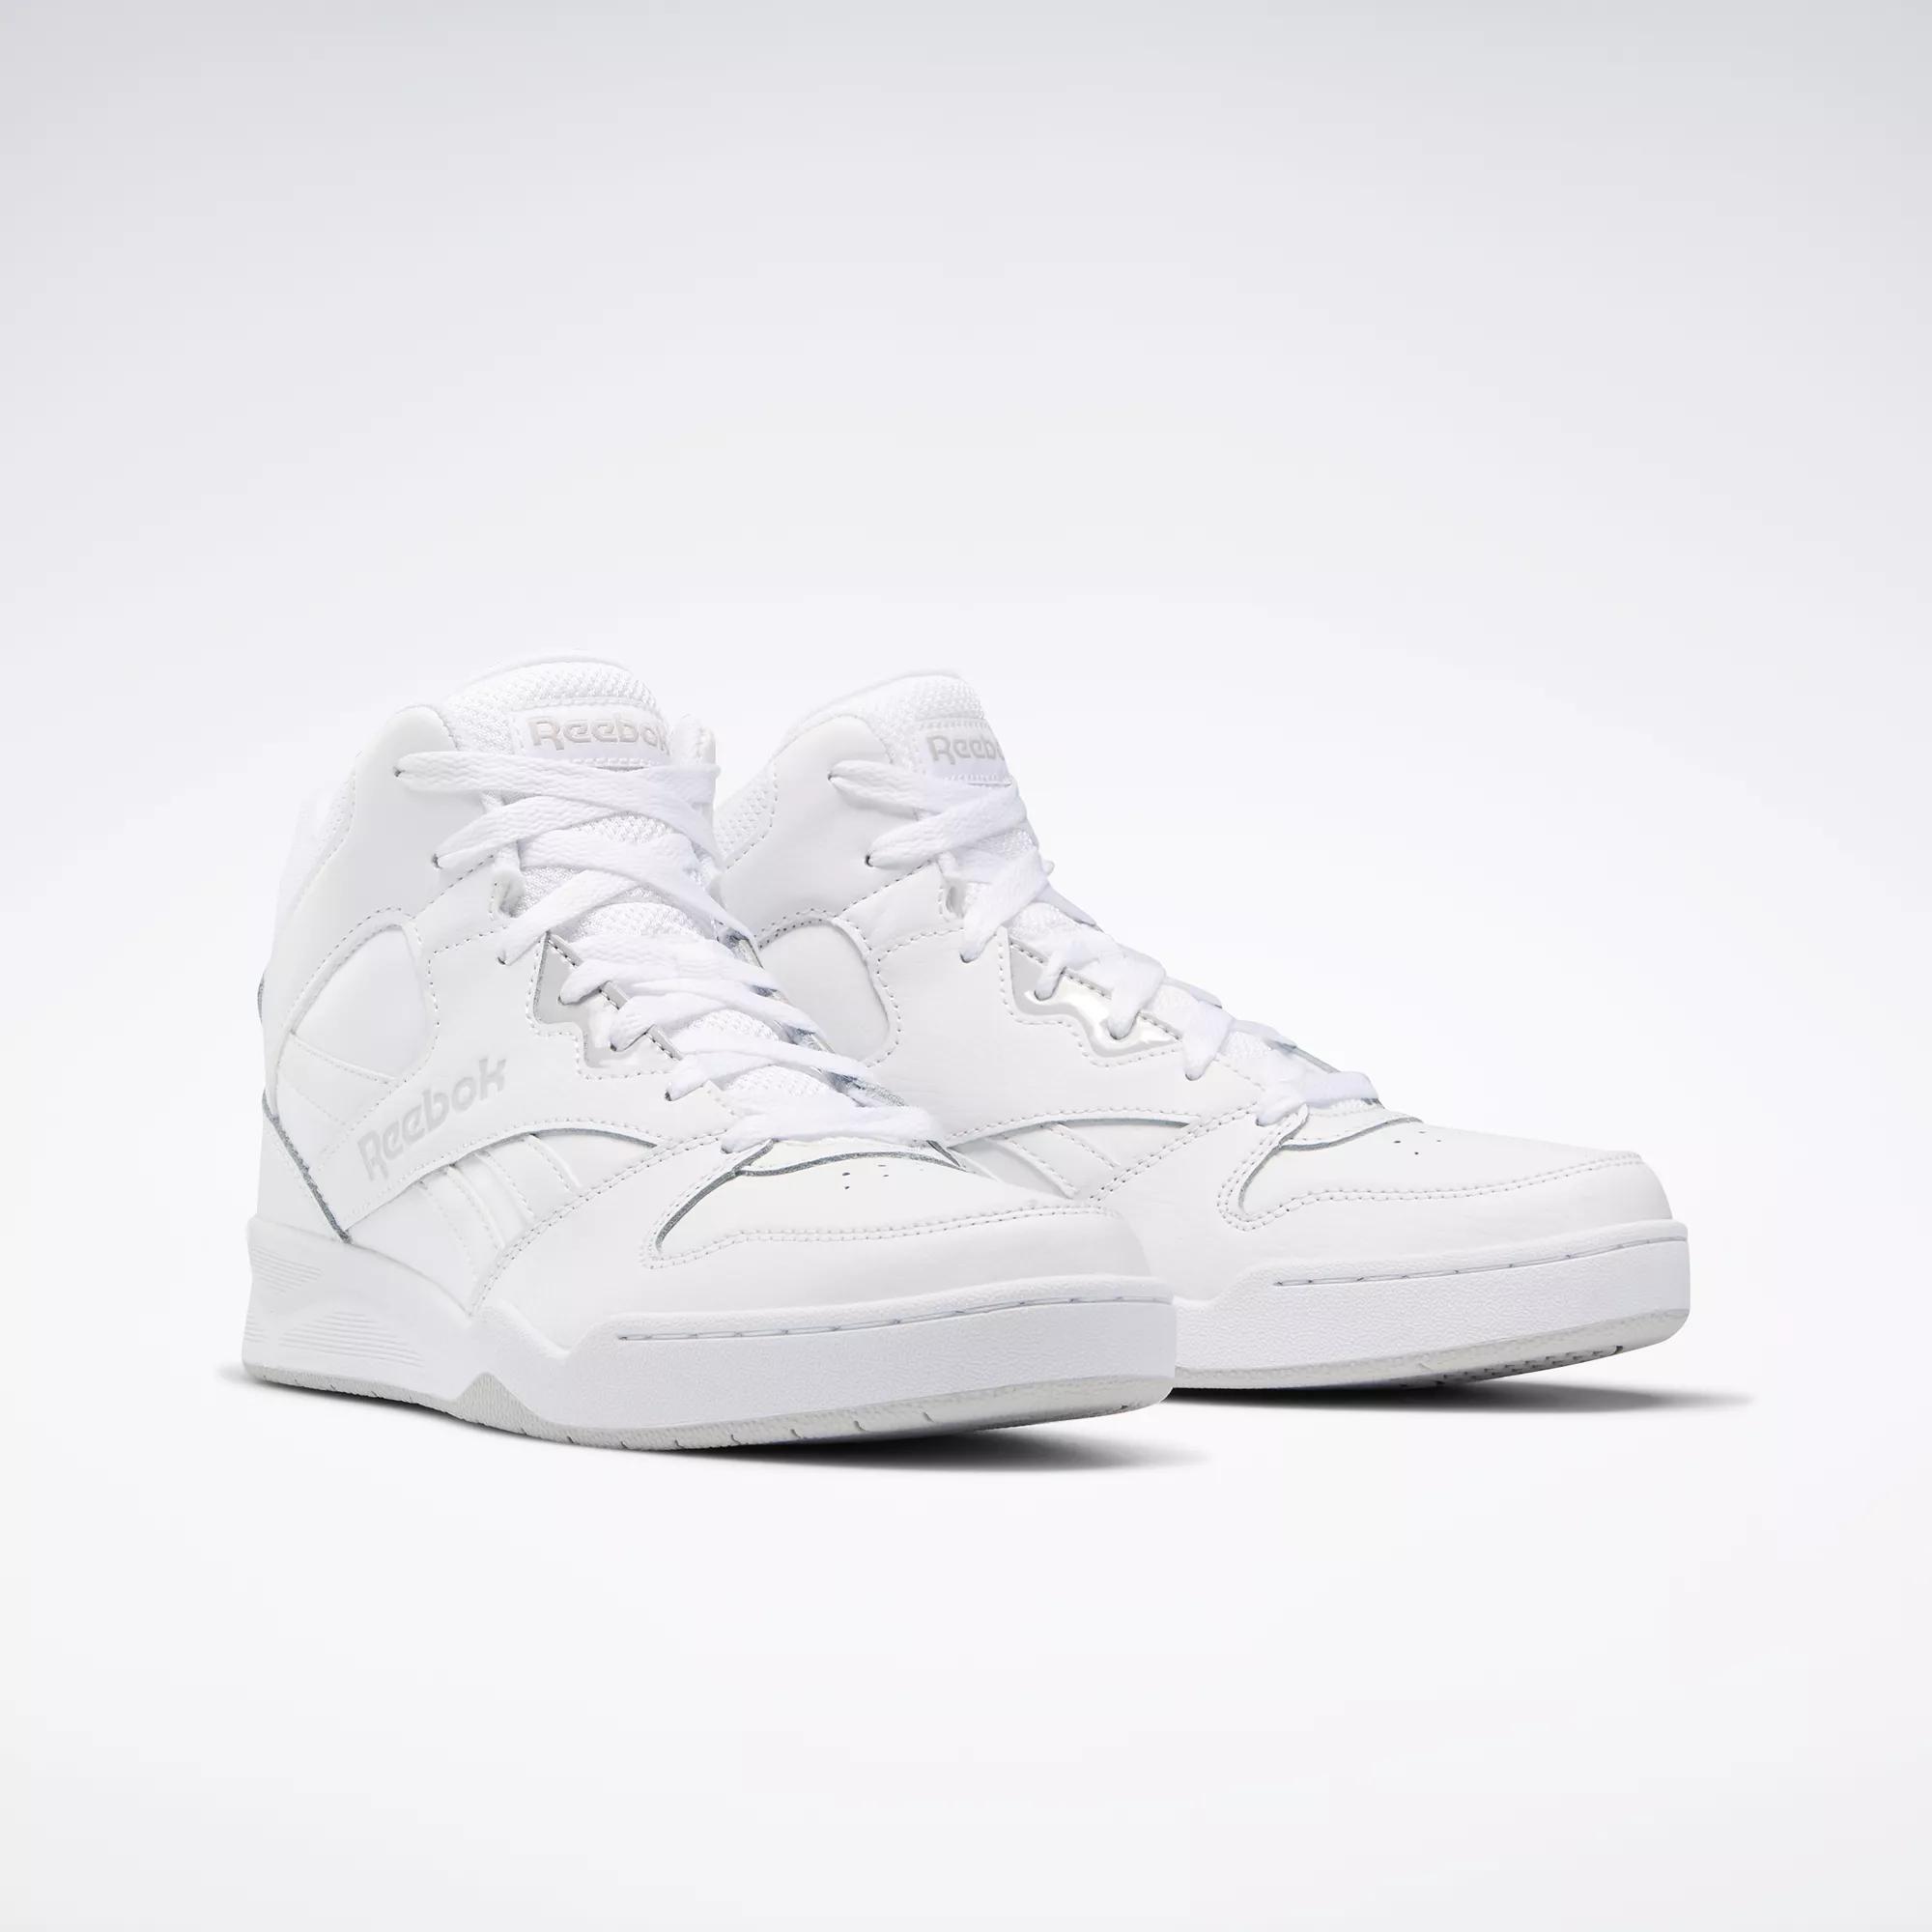 Reebok Royal BB Hi 2 Men's Basketball Shoes - White / Lgh Solid Grey | Reebok